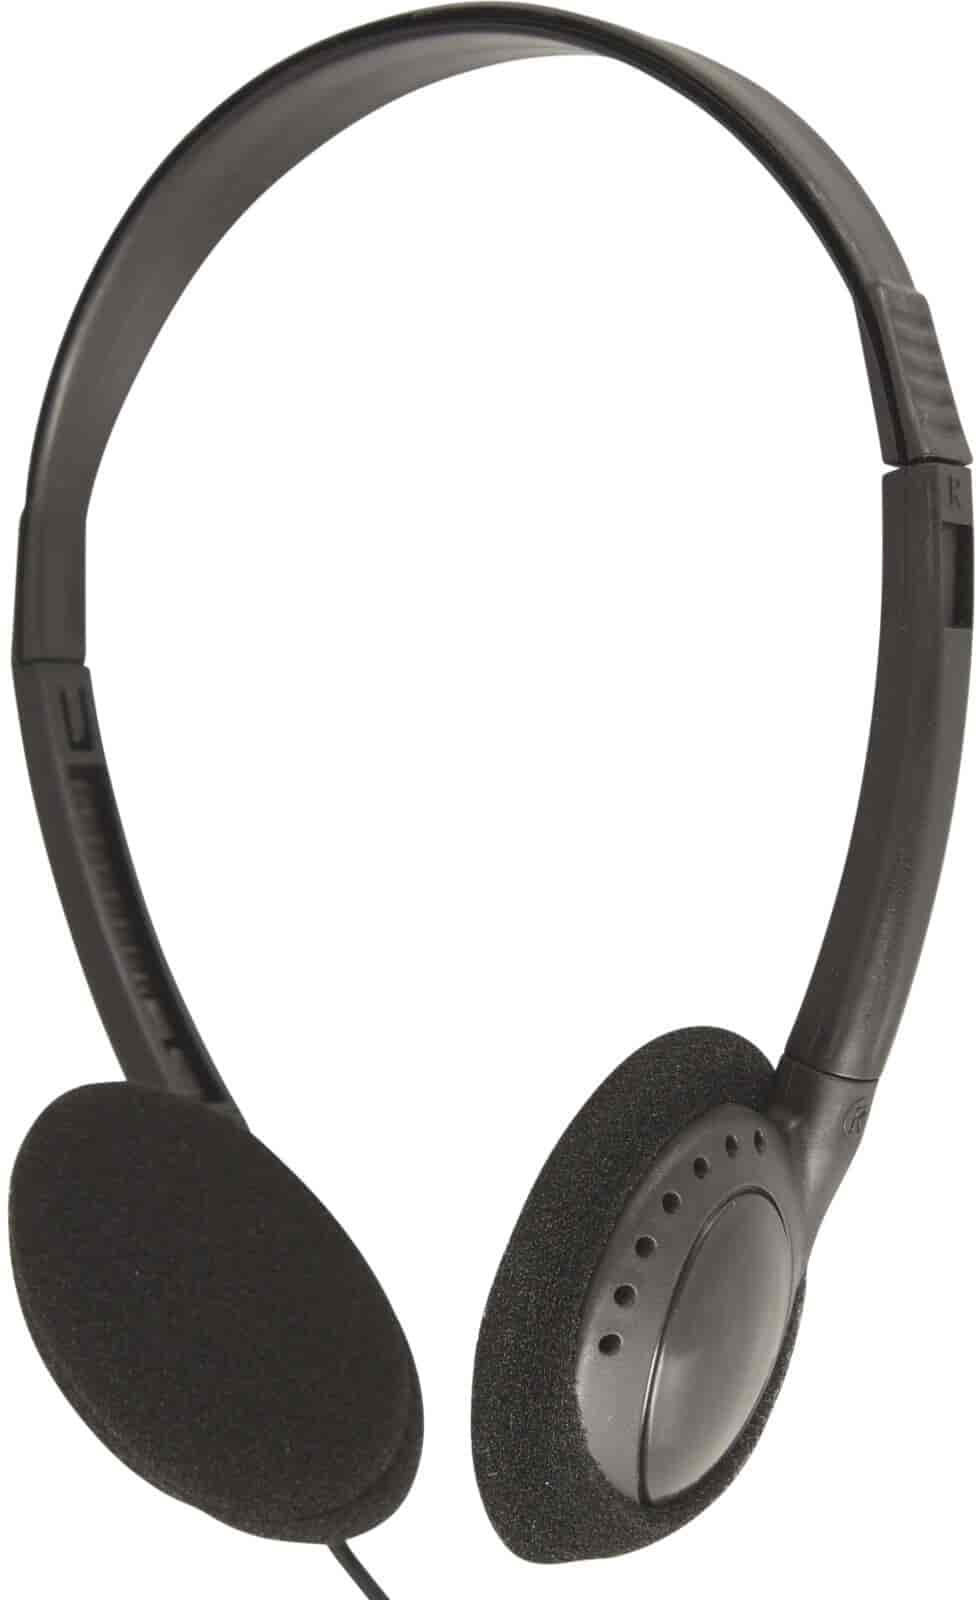 Sandberg Bulk Headphone (min 100)Standard music headphone with foldable earcups. Suited for airlines, trains, busses, hospitals, cinemas etc. Bulk packed, min. order 100 pcs.Sandberg